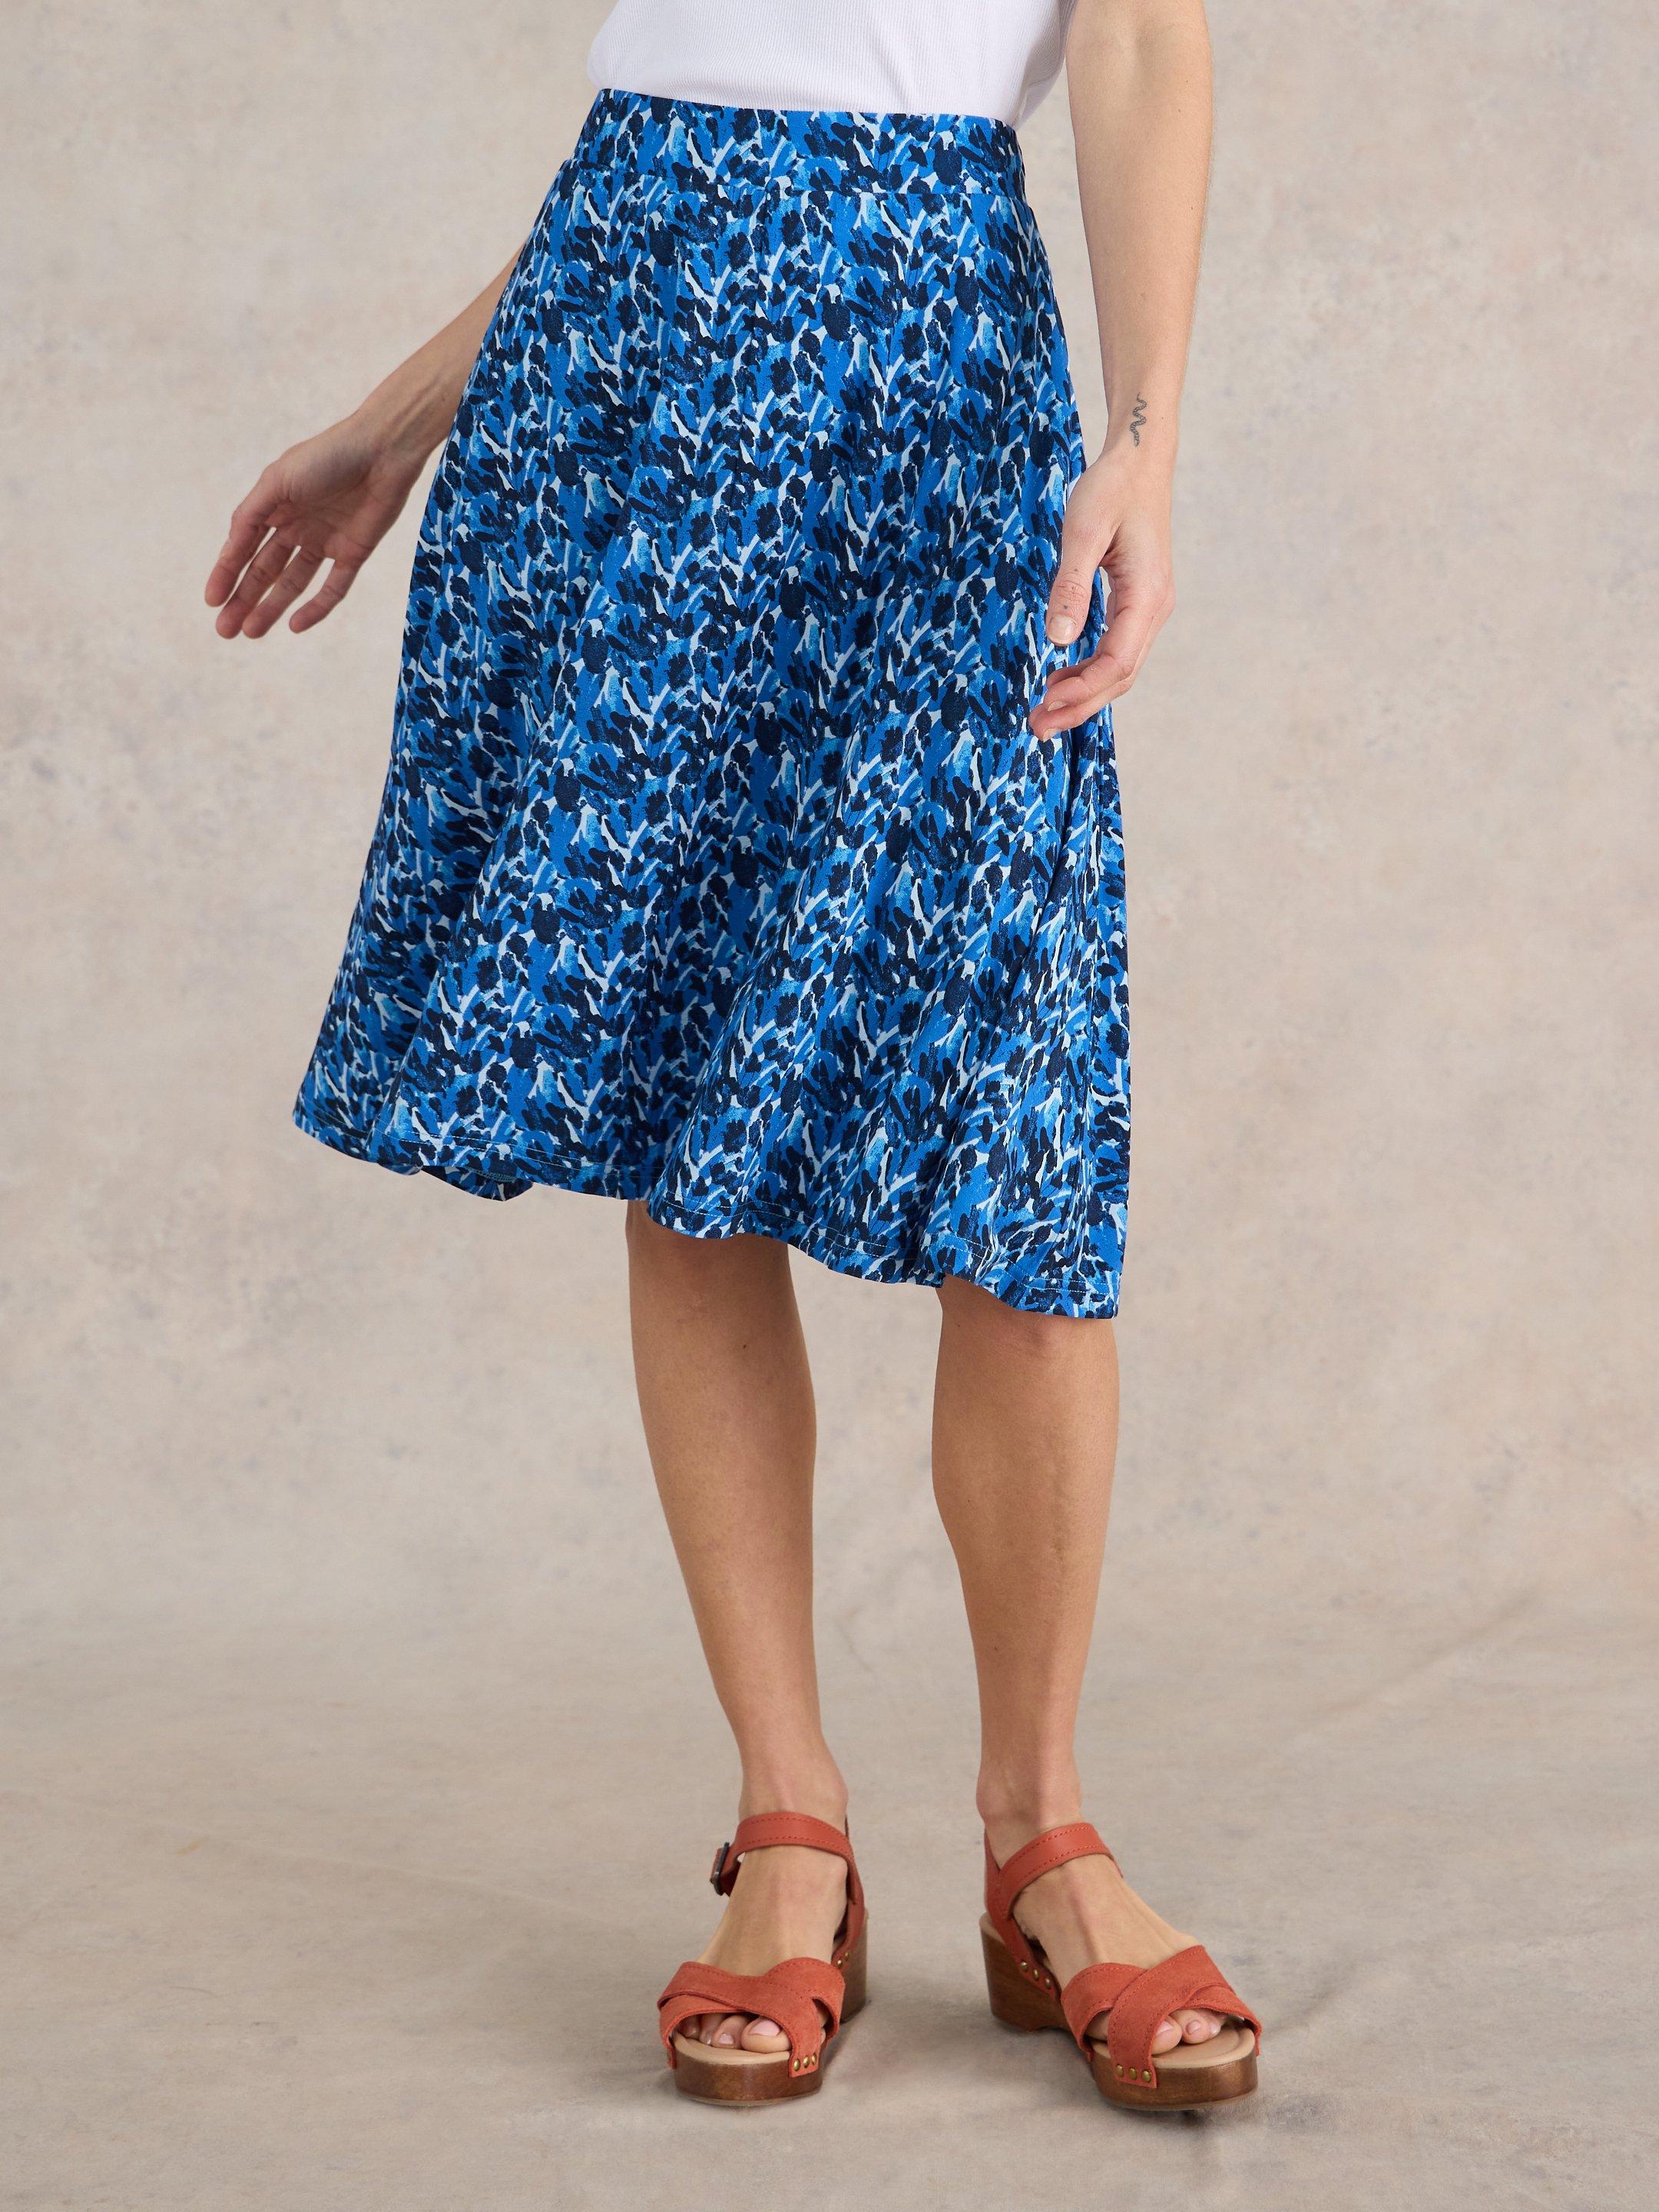 Jade Eco Vero Jersey Skirt in BLUE PR - MODEL DETAIL